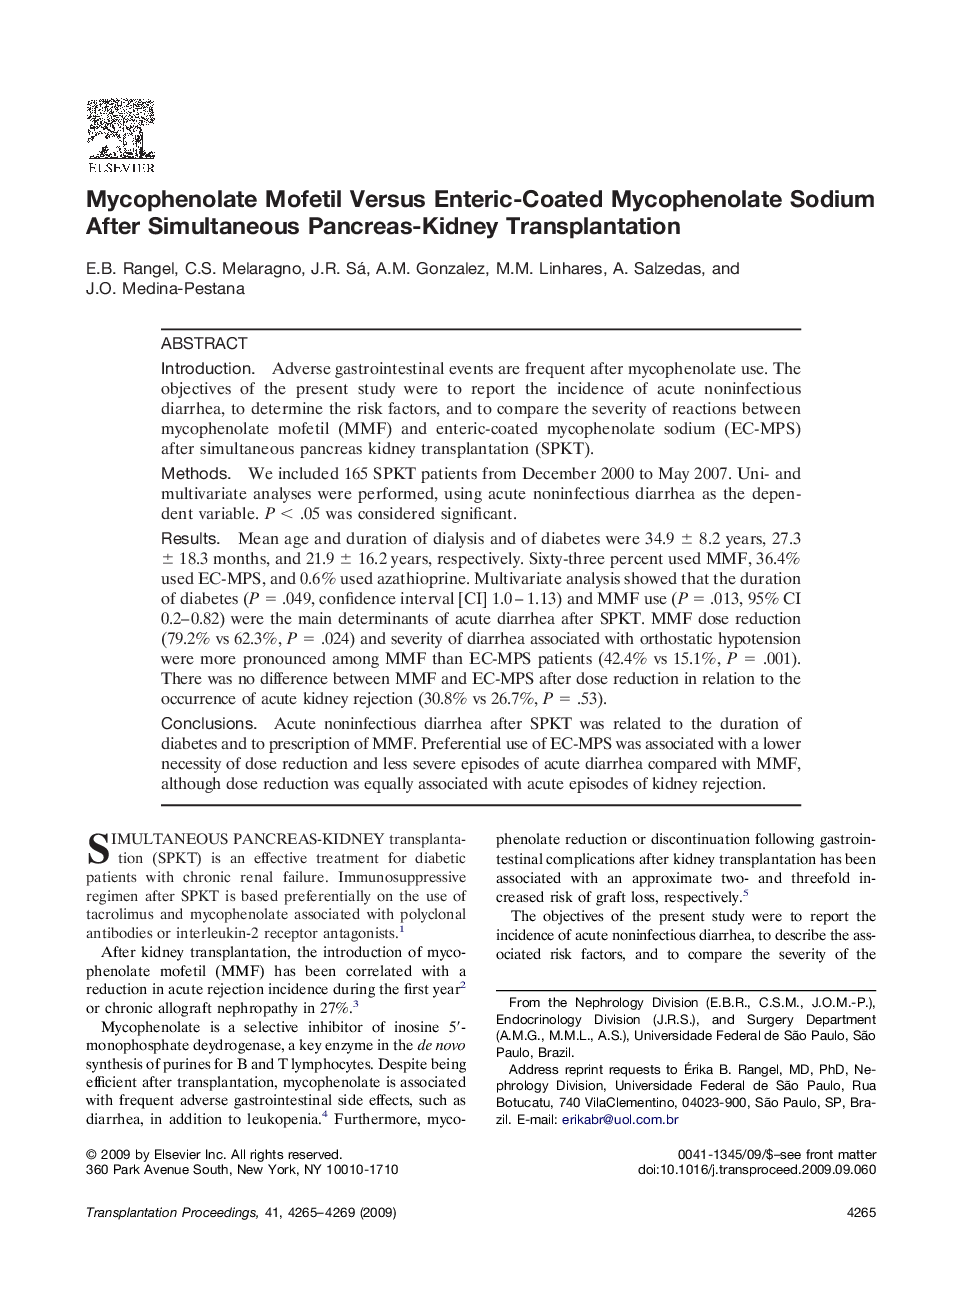 Mycophenolate Mofetil Versus Enteric-Coated Mycophenolate Sodium After Simultaneous Pancreas-Kidney Transplantation